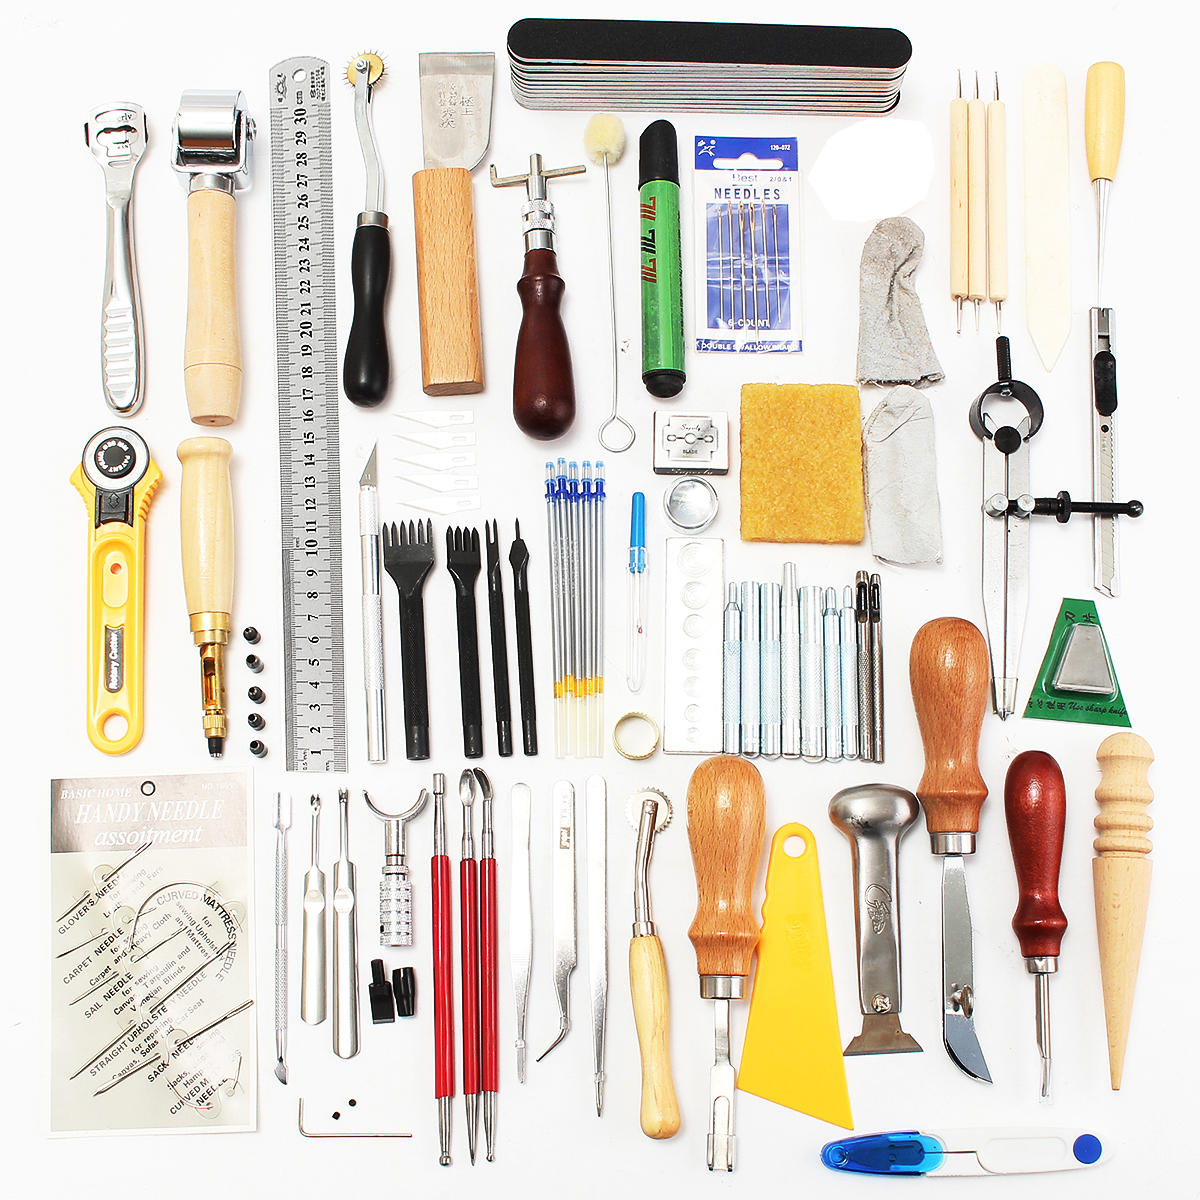 59 stuks lederen craft tool kit voor hand naaien stiksels stempelen set zadel making tool